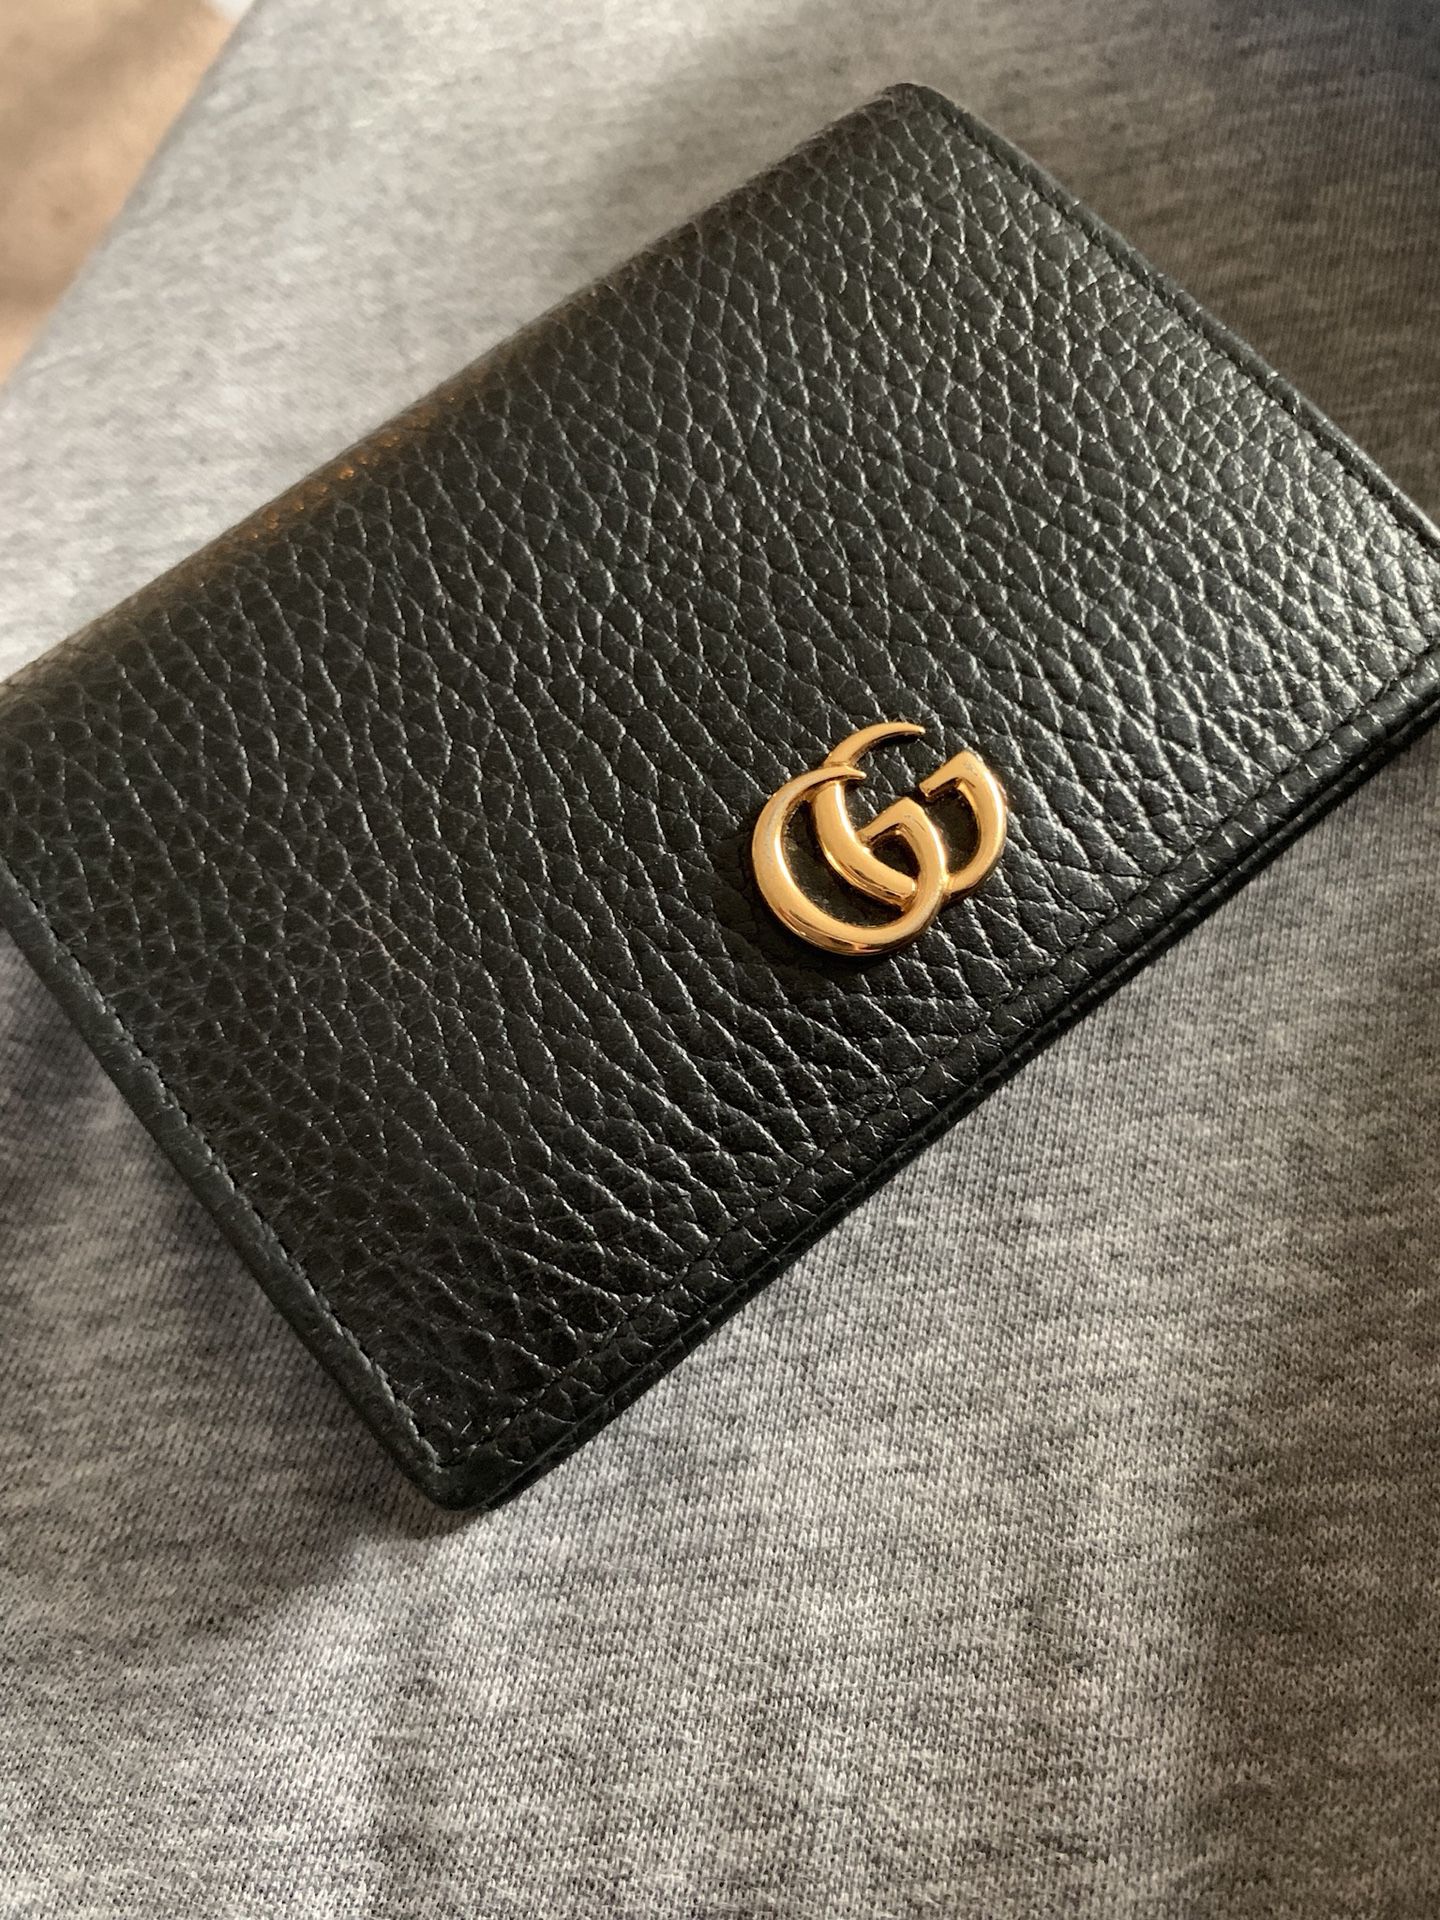 Authentic Gucci Women’s Wallet